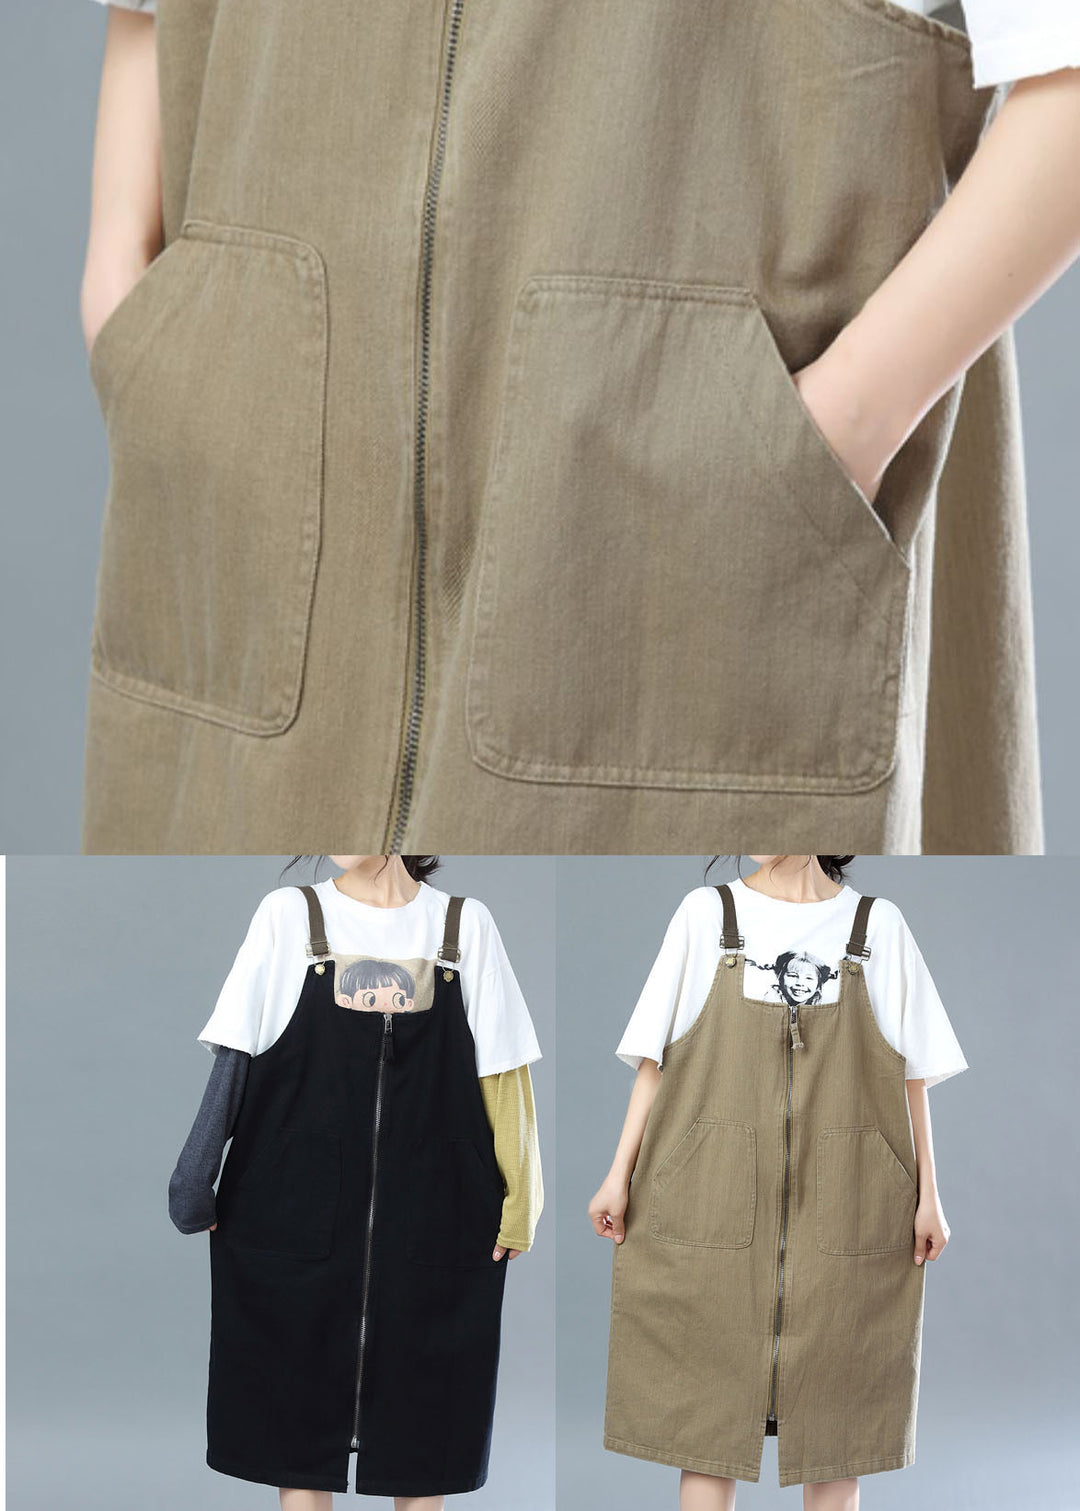 Khaki Cotton Suspender Dresses Zip Up Summer